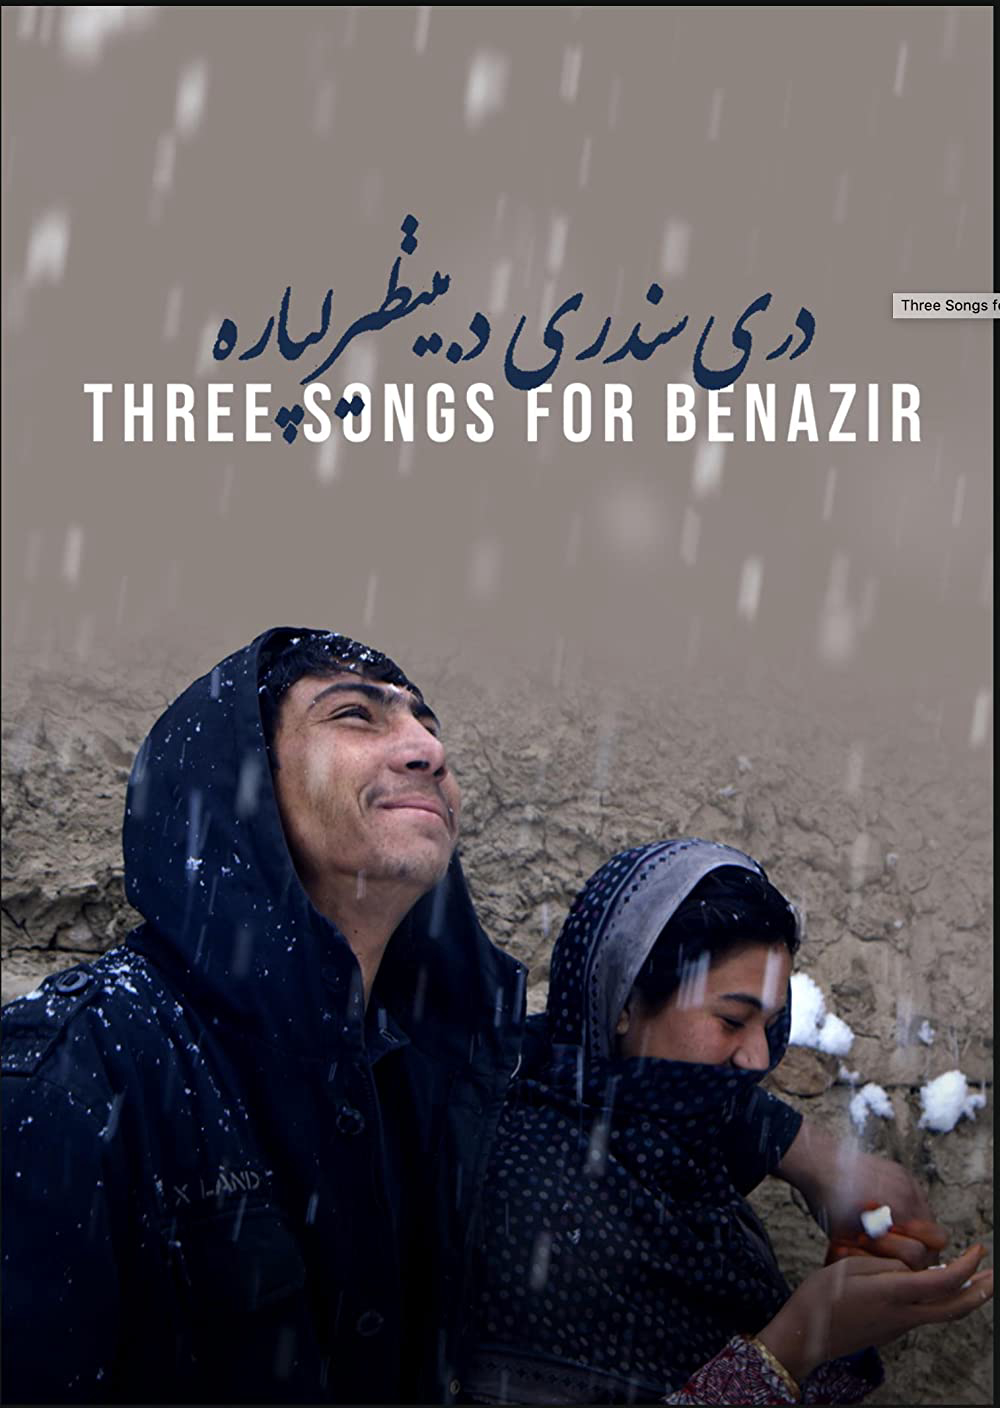 Xem Phim Ba bài hát cho Benazir (Three Songs for Benazir)